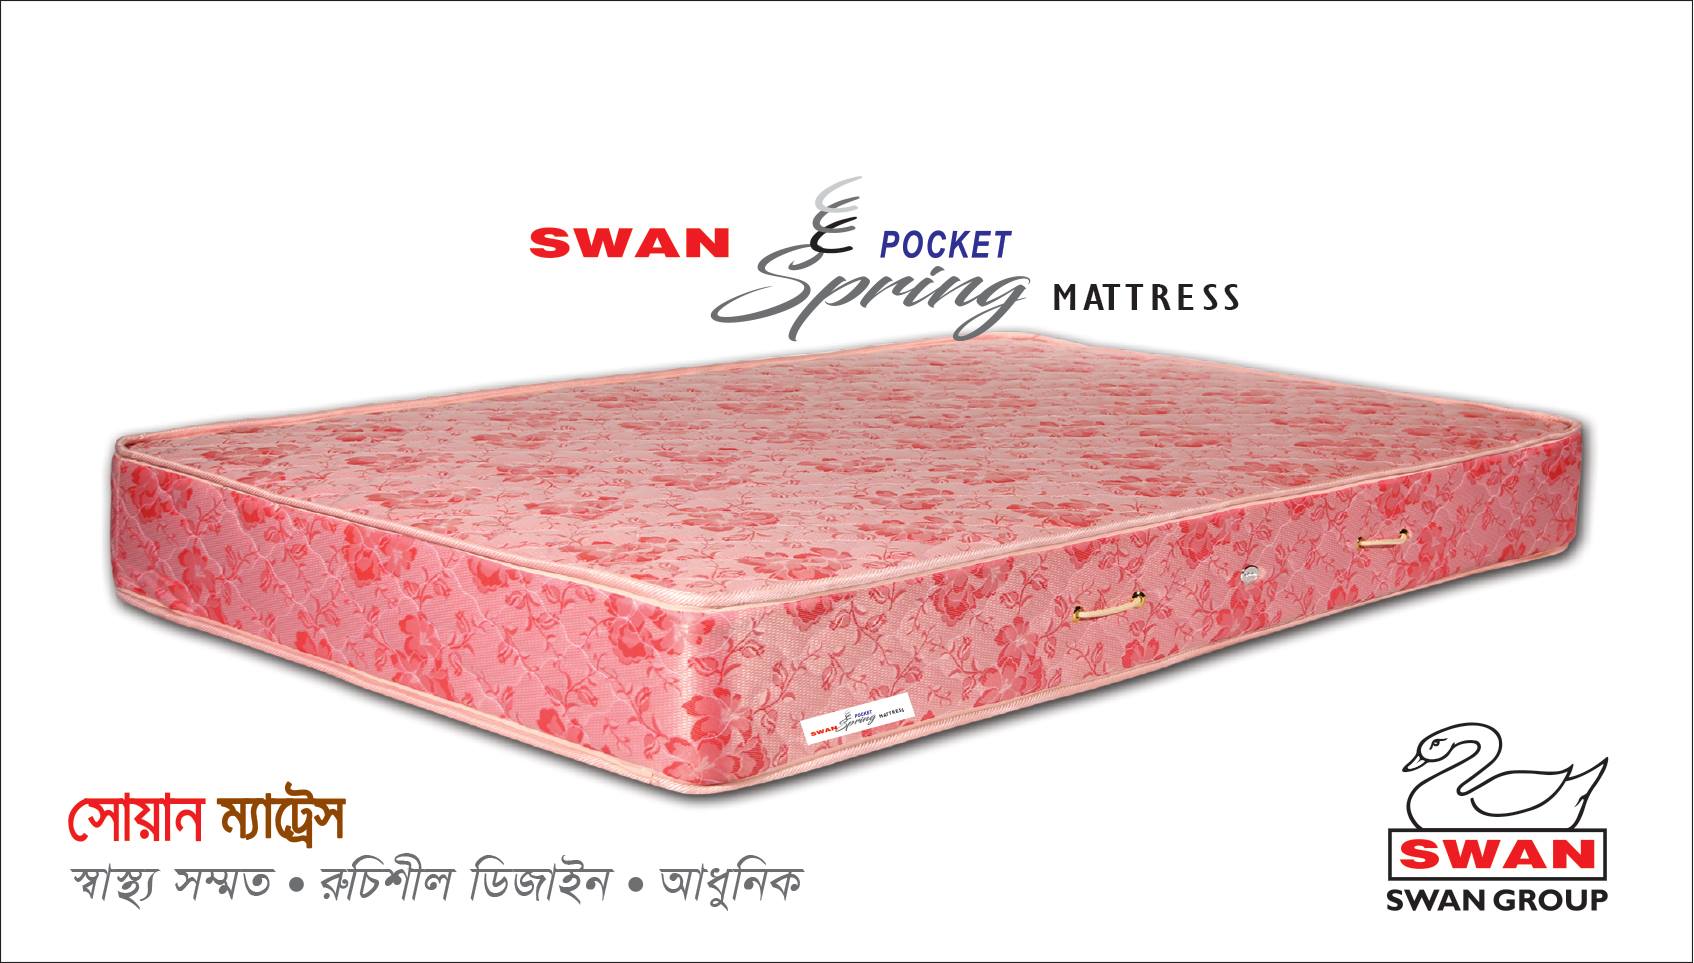 Swan Pocket Spring Mattress